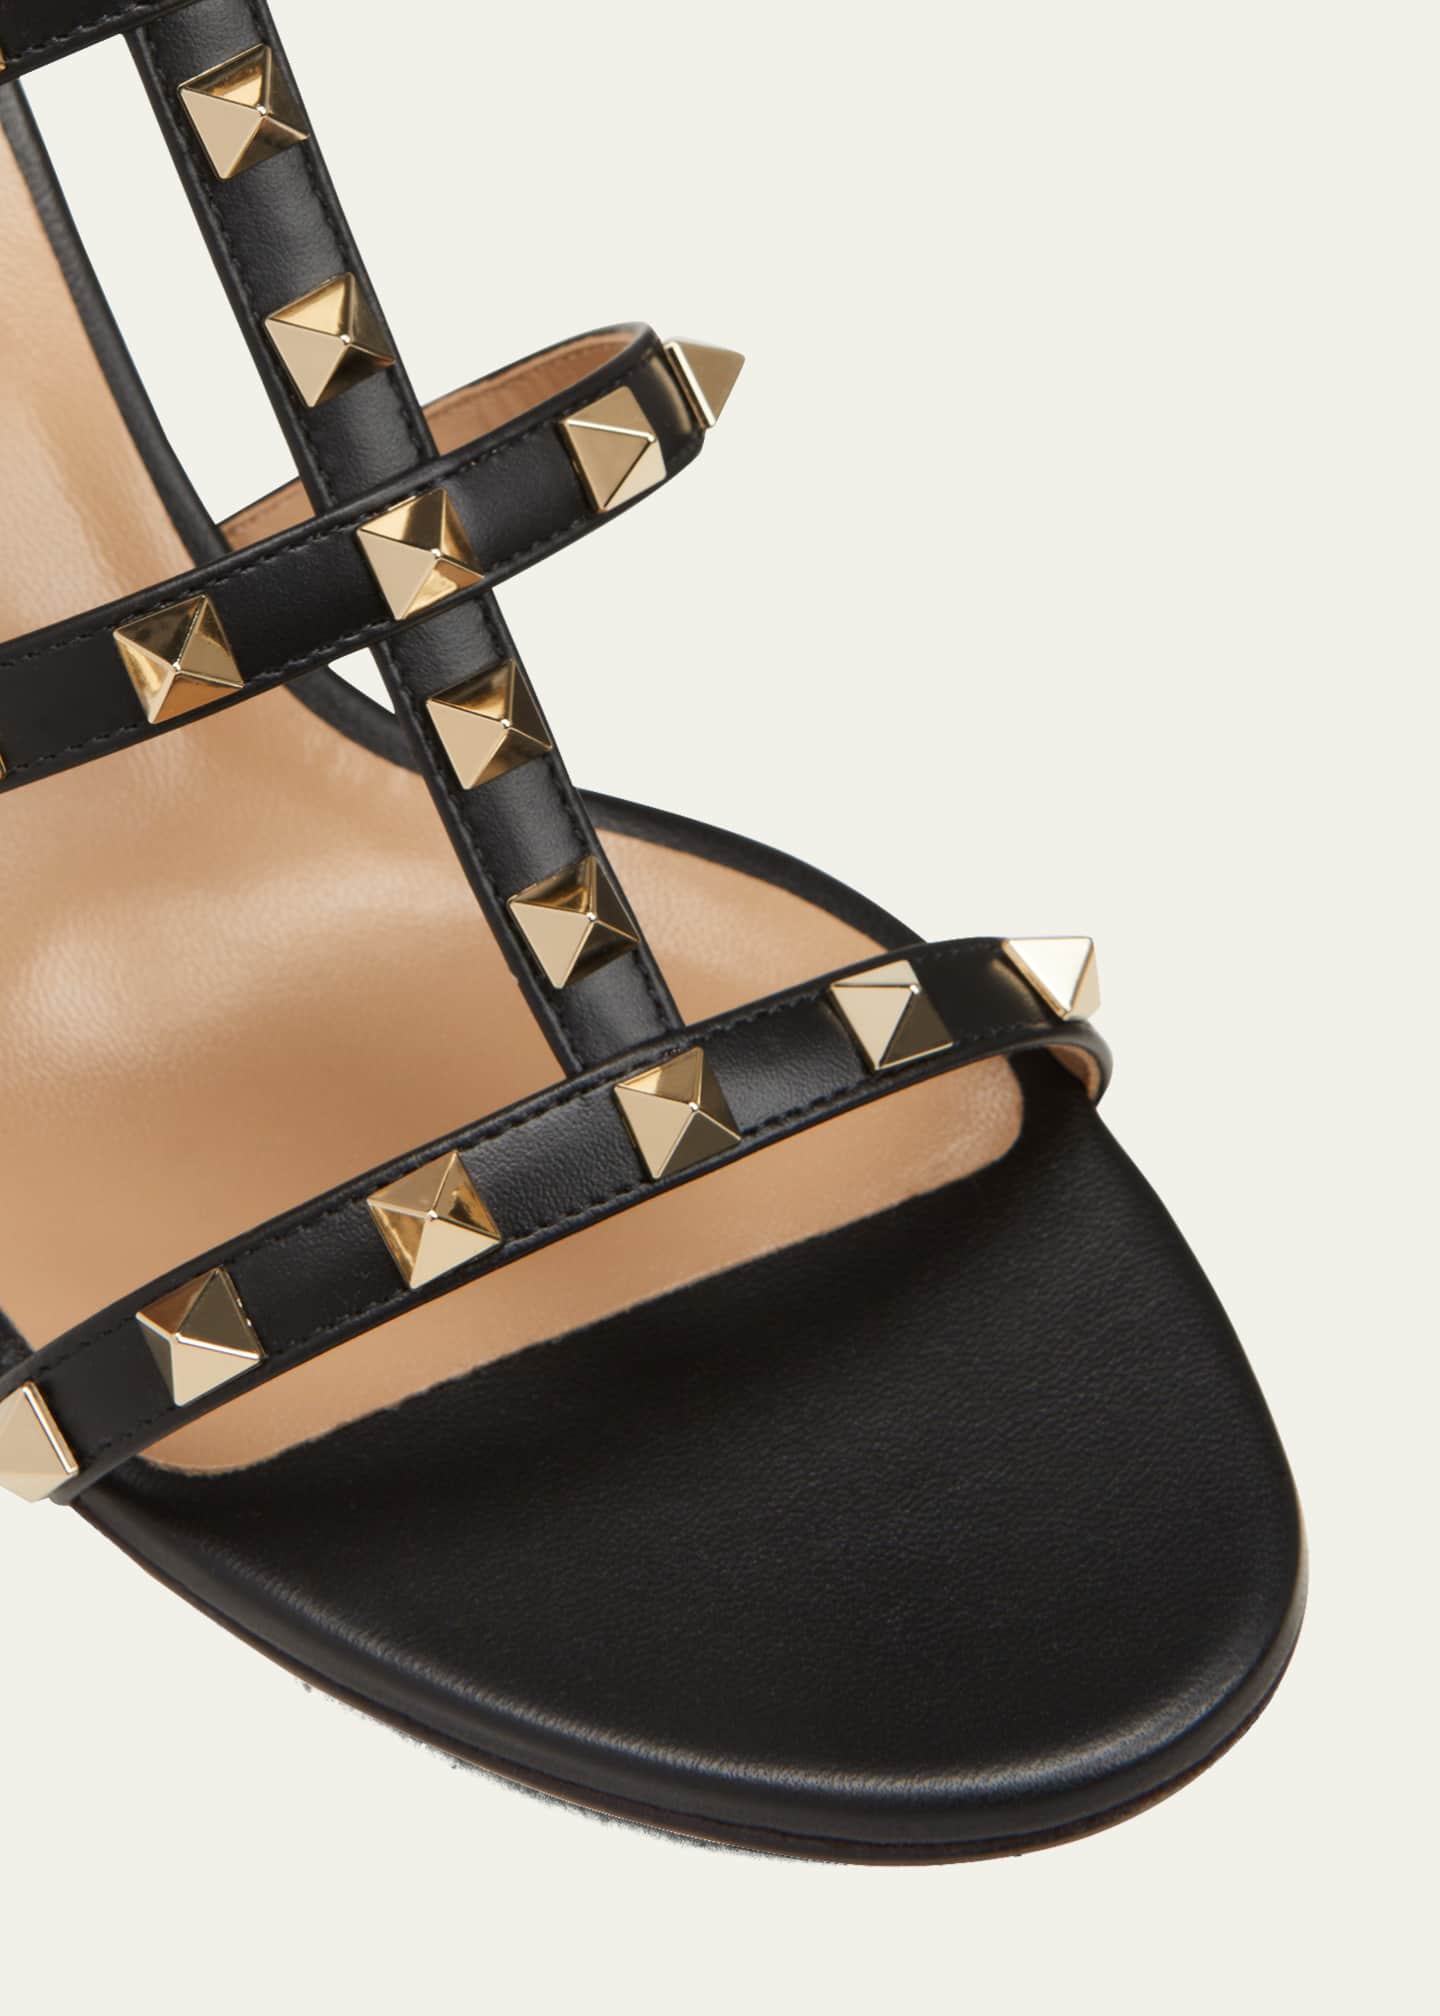 Rockstud Calfskin Leather Slide Sandal 60 Mm for Woman in Poudre